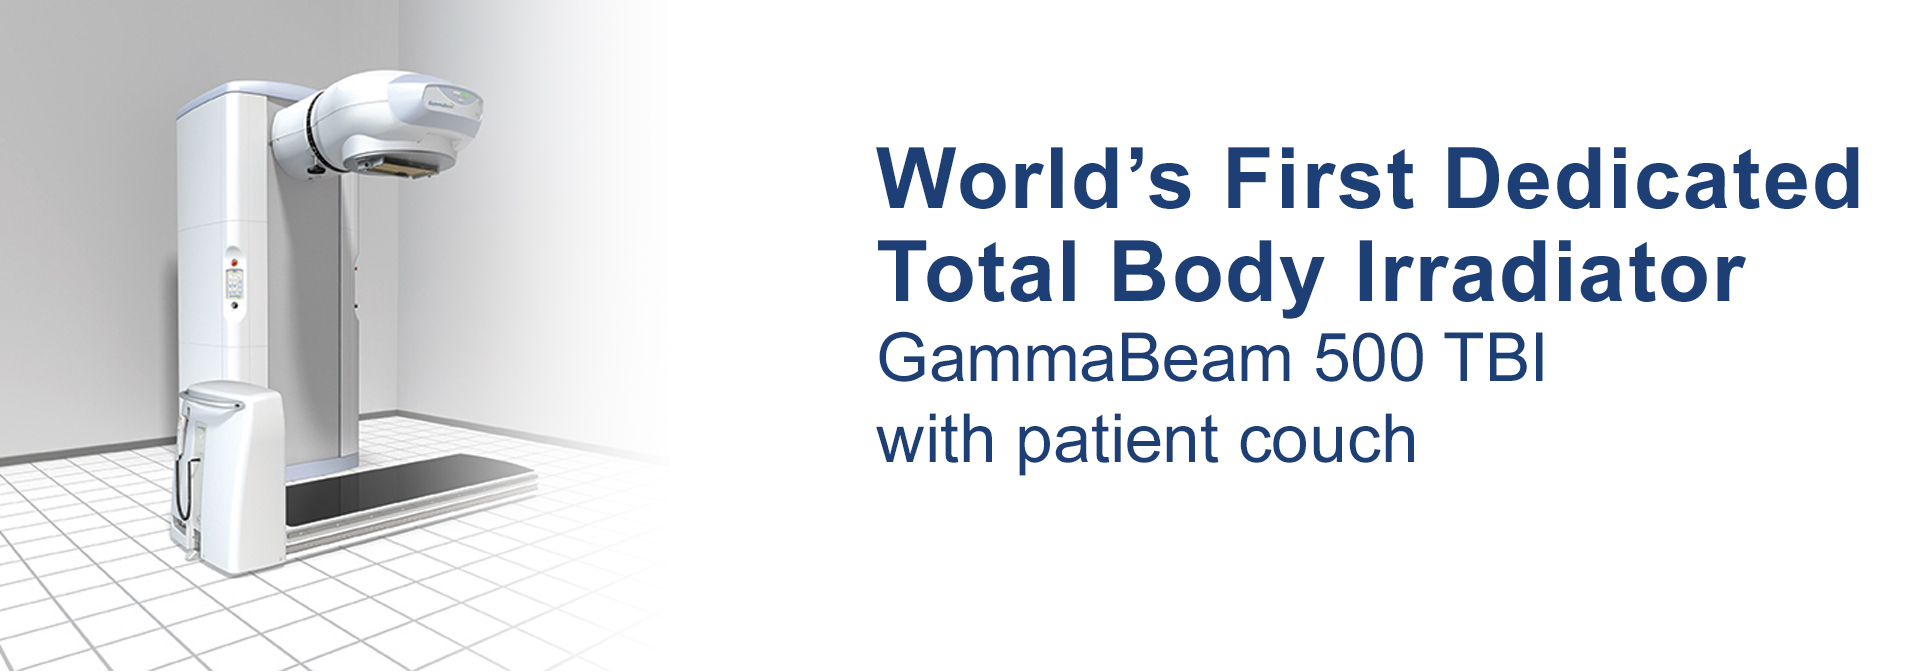 GammaBeam 500: World's First Dedicated Total Body Irradiator